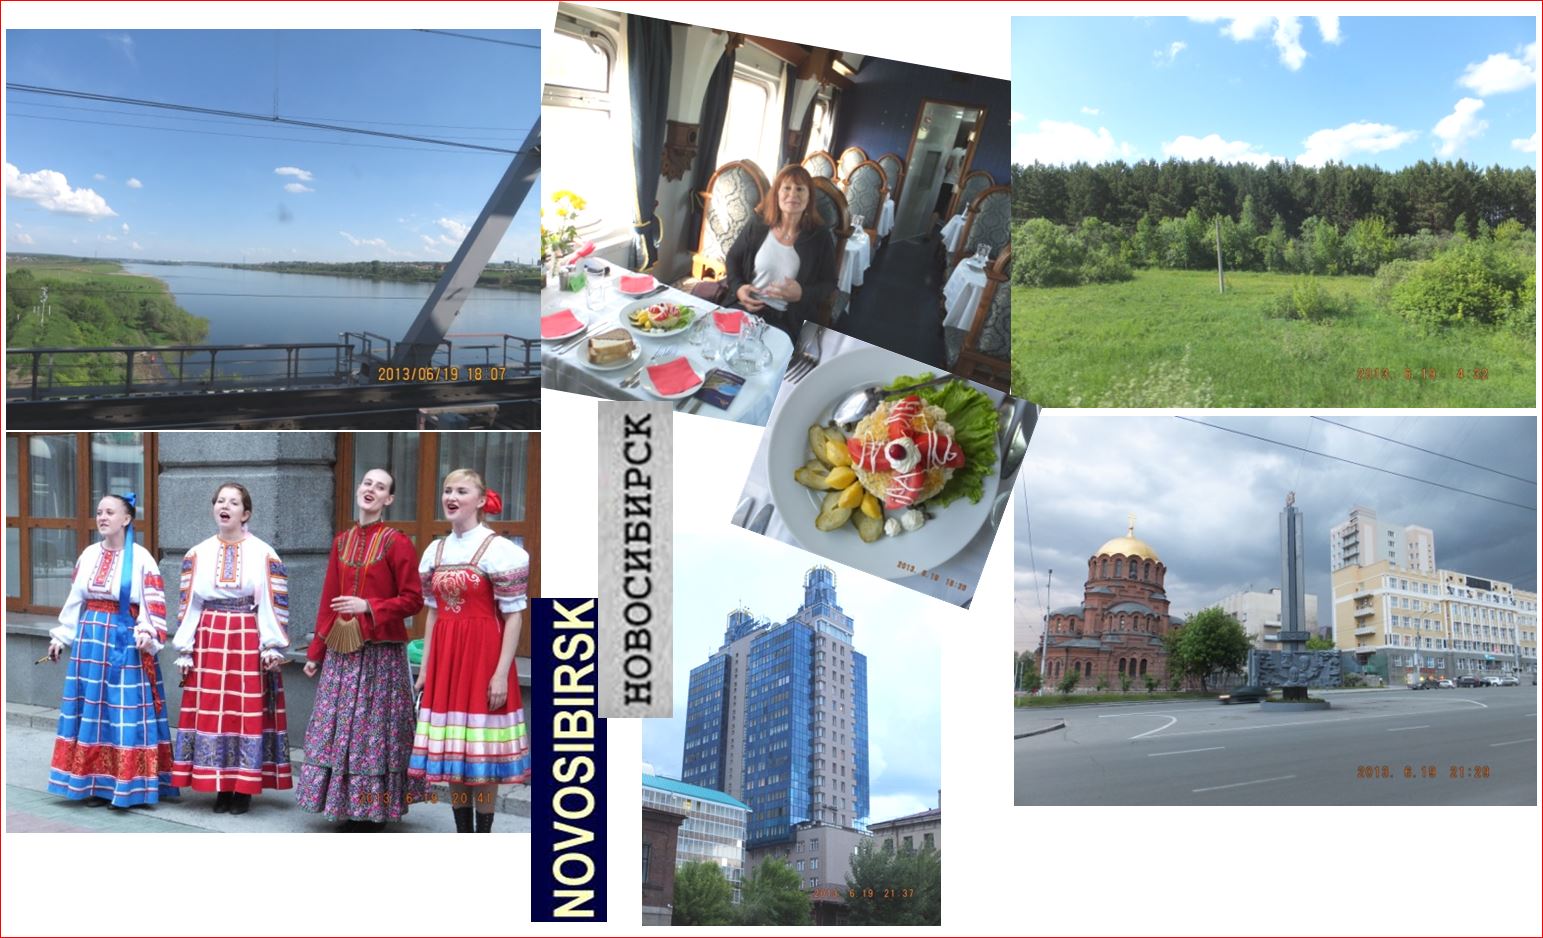 ragg 2013-06-19 - 1120Aweb - Transsib - Russland Novosibirsk - Tag 12 - S15 B02